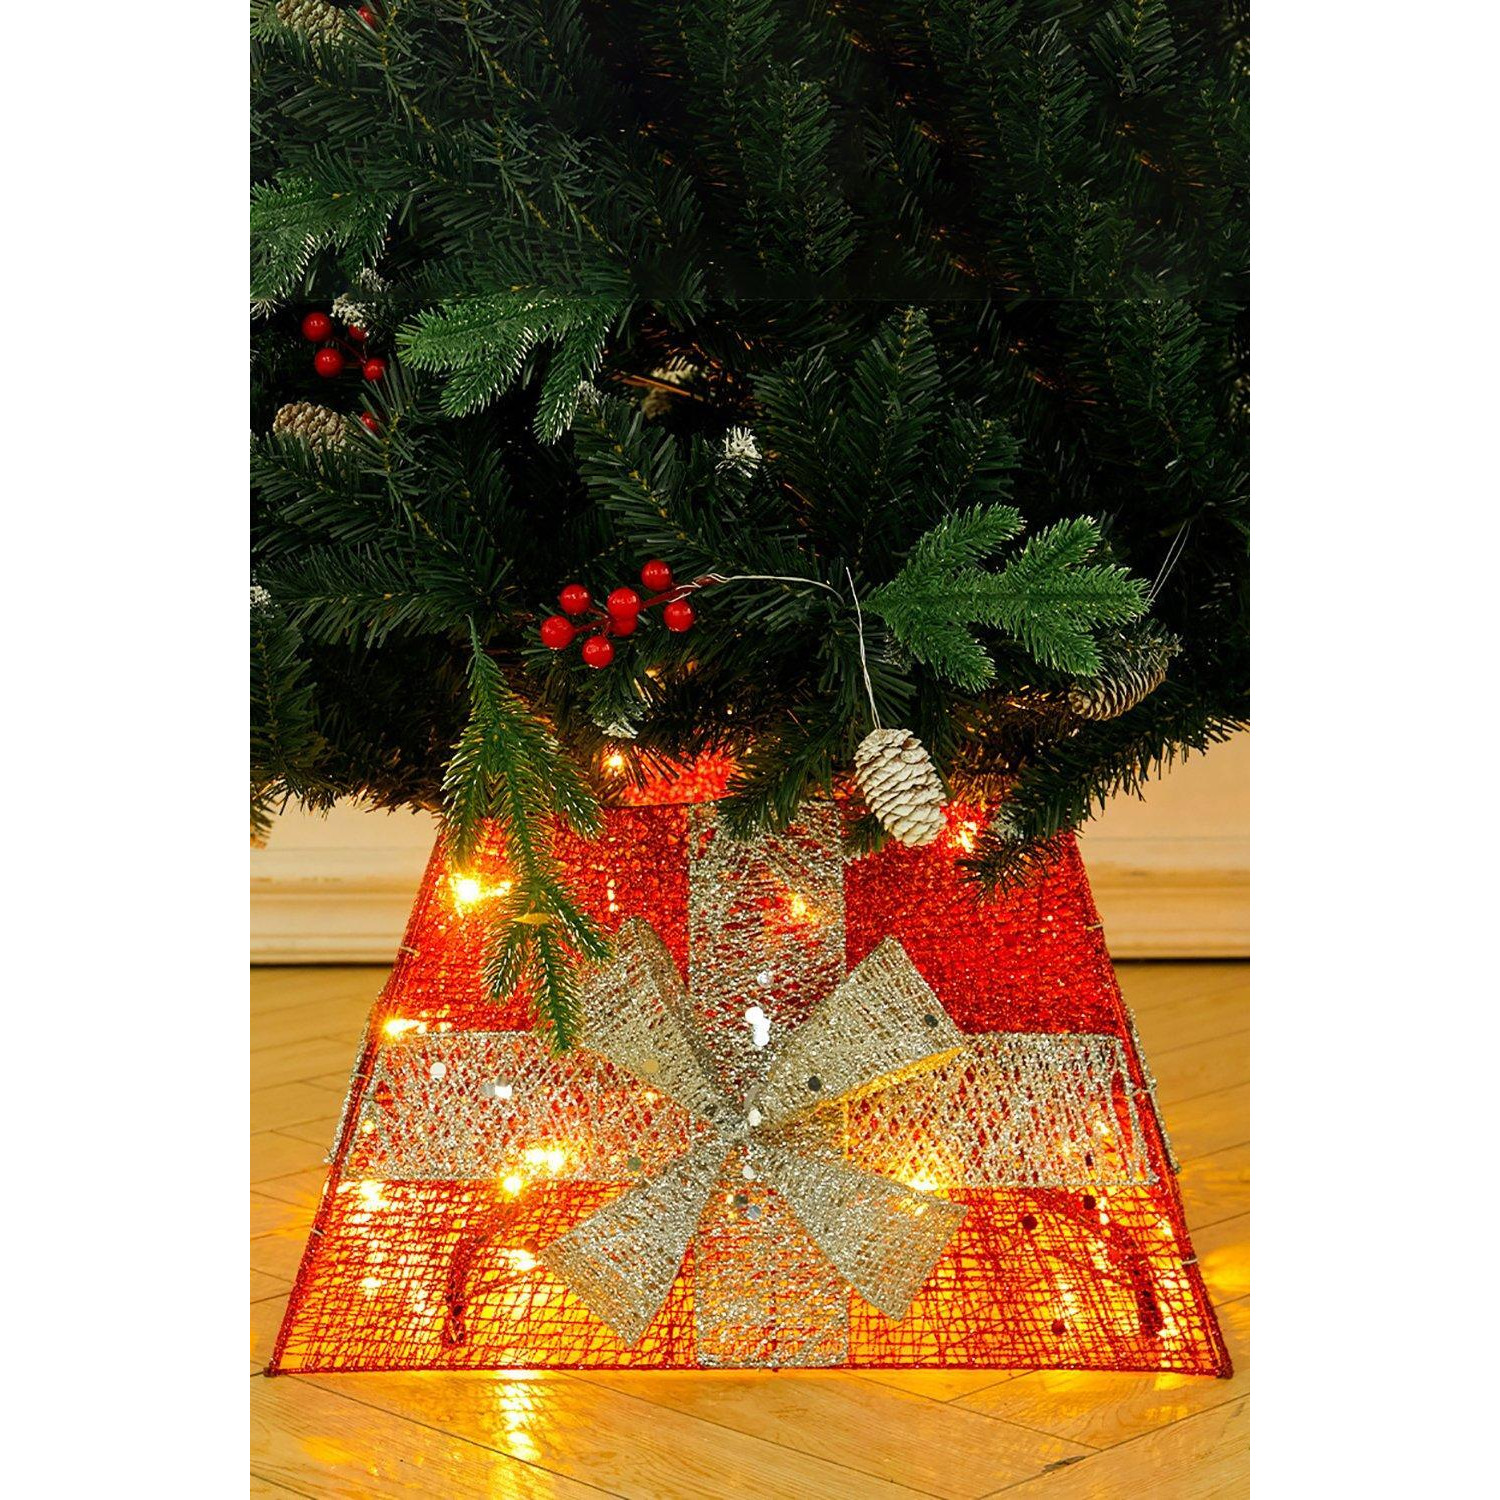 Square Christmas Tree Collar Basket Decor with Bow Tie - image 1